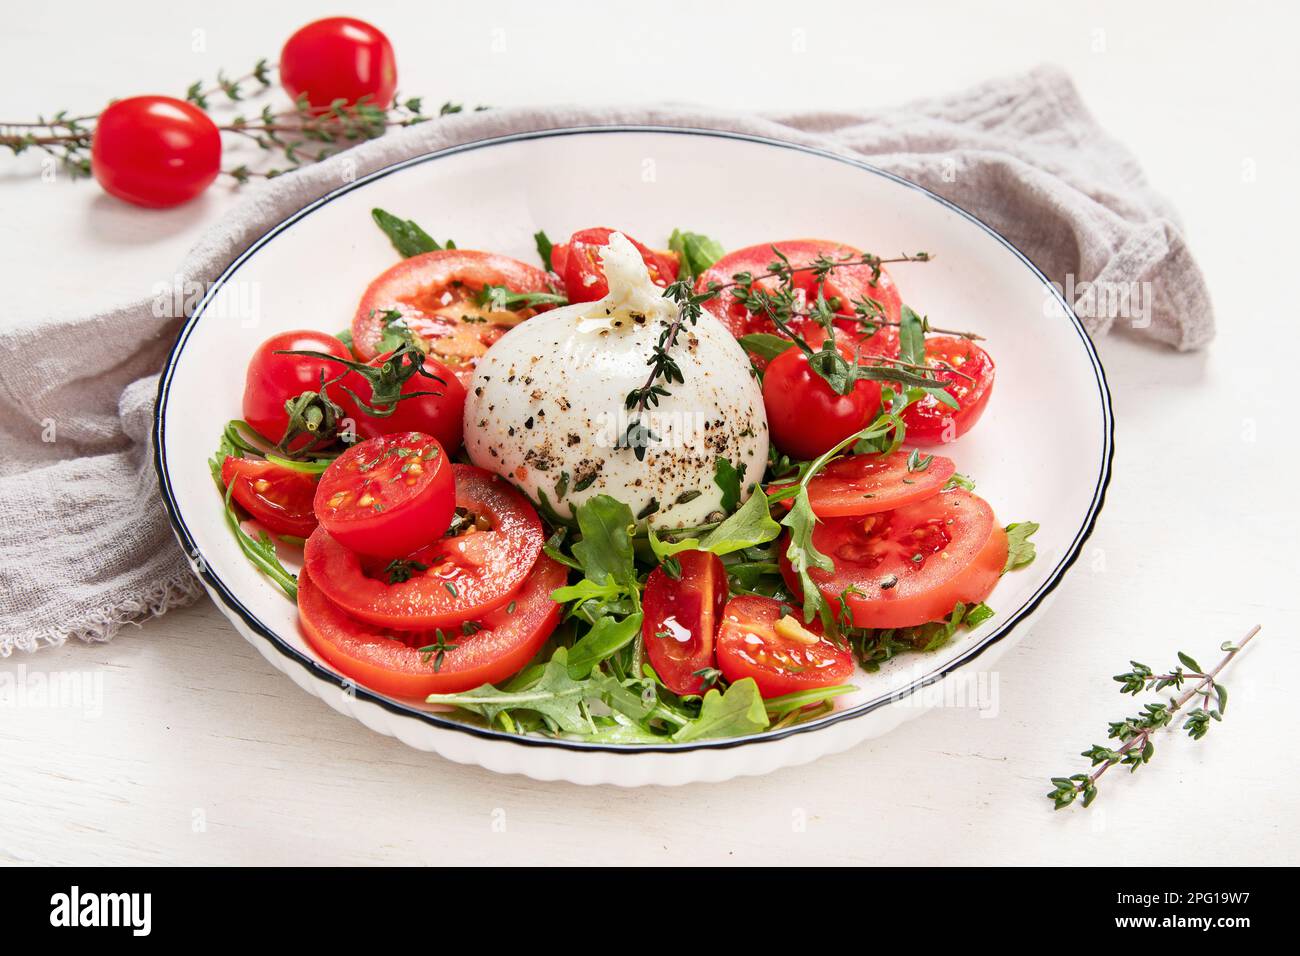 Tomato, basil, mozzarella. Caprese salad with olive oil. Top view, white background. Stock Photo